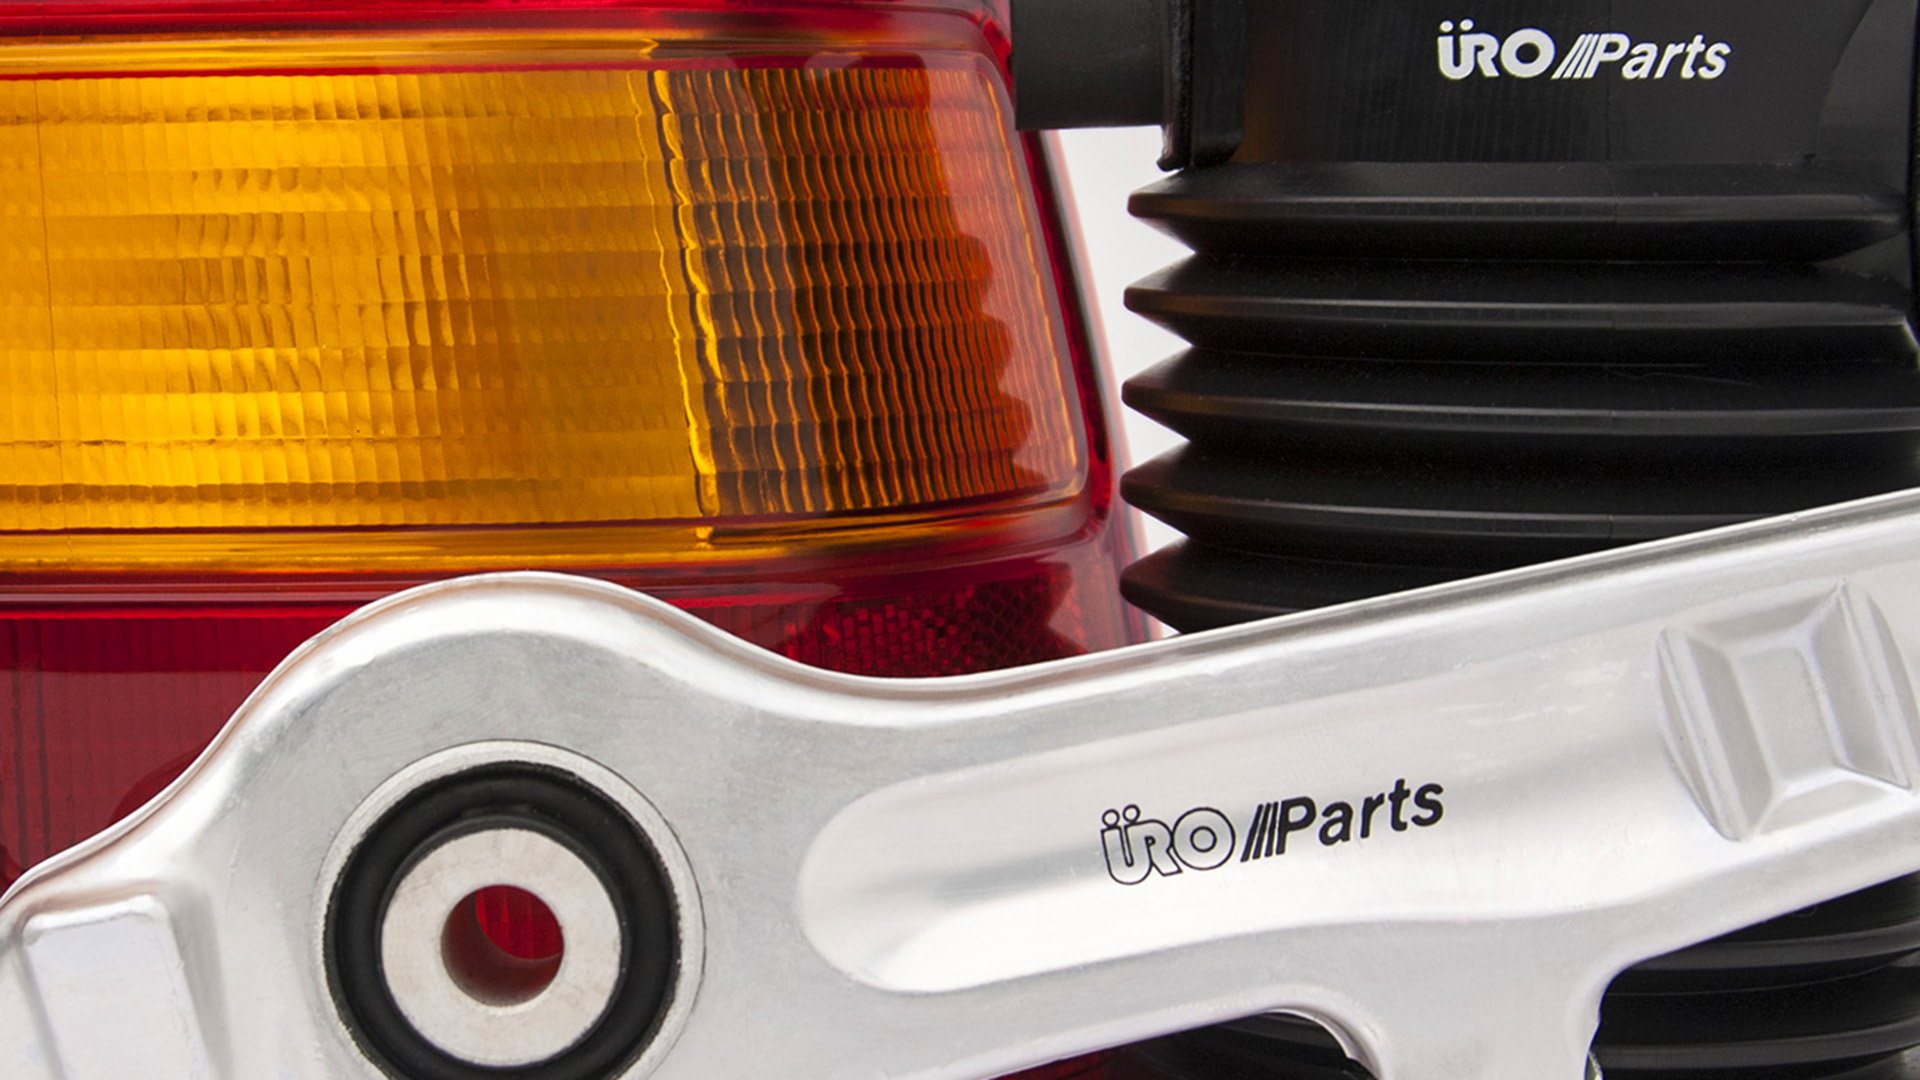 URO Parts 30681625 Muffler Bracket Repair Kit by URO Parts 